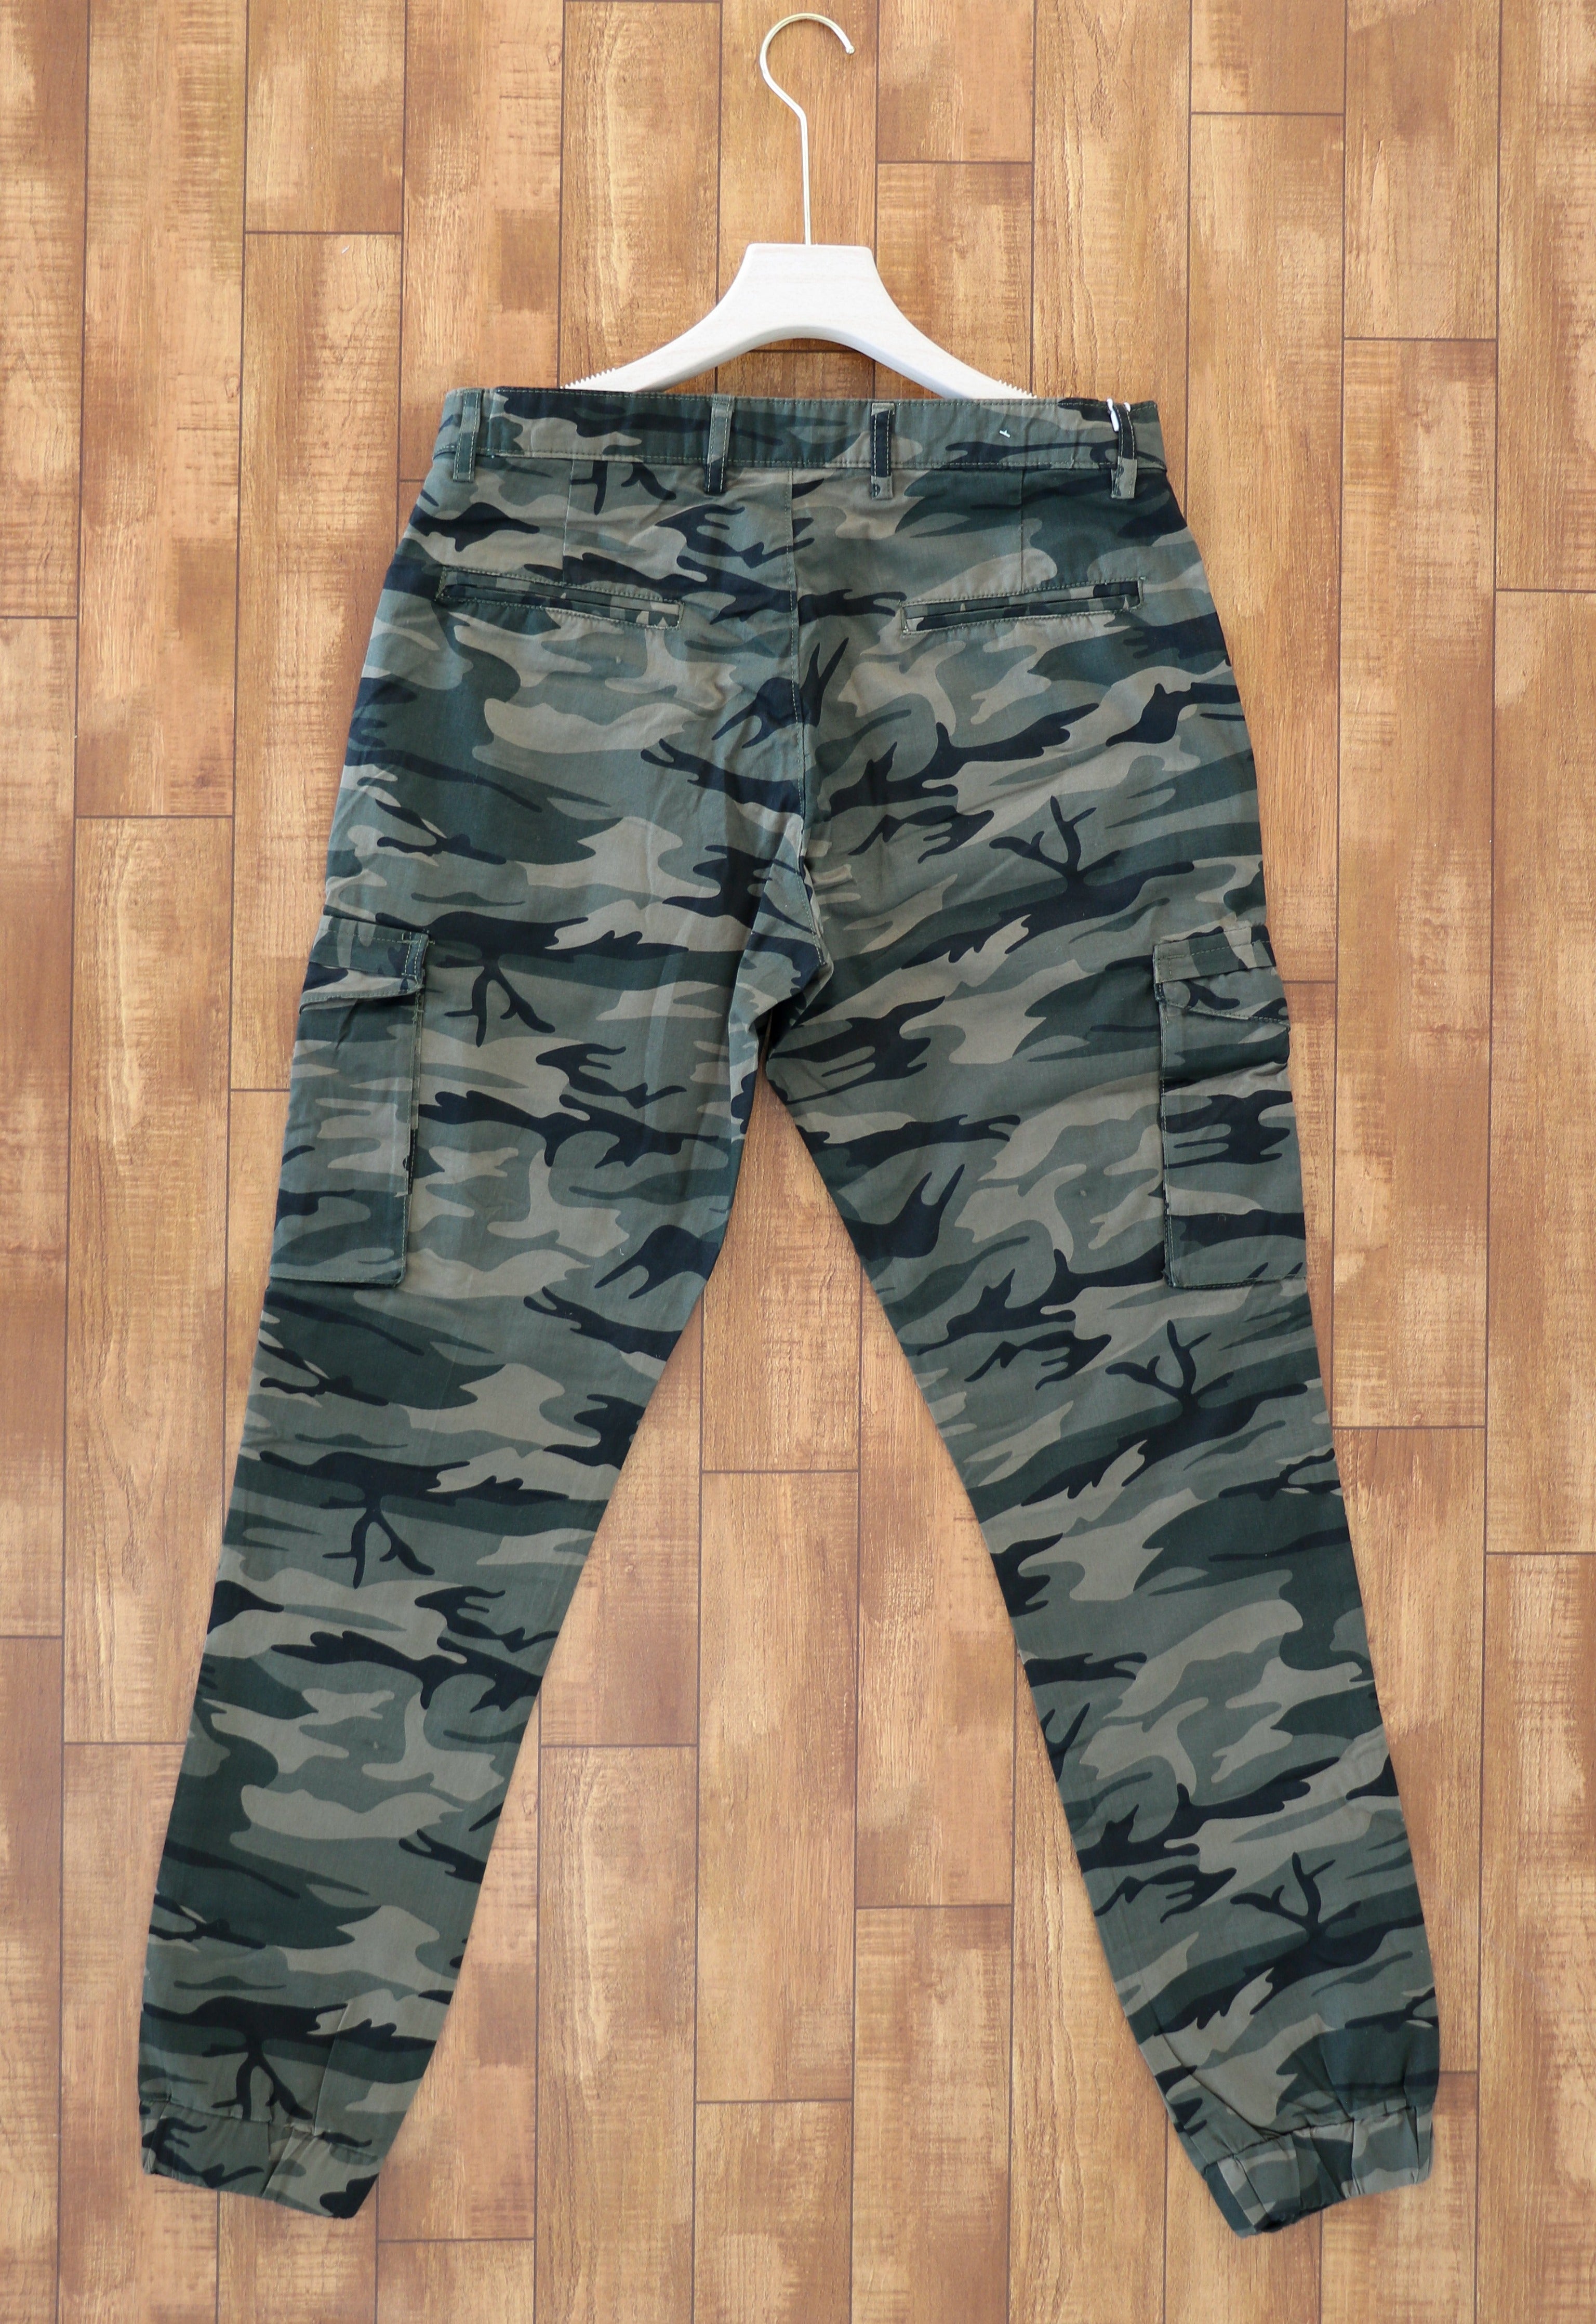 Men Cargo Trousers Pants Army Military Camo Print SG520  Camo